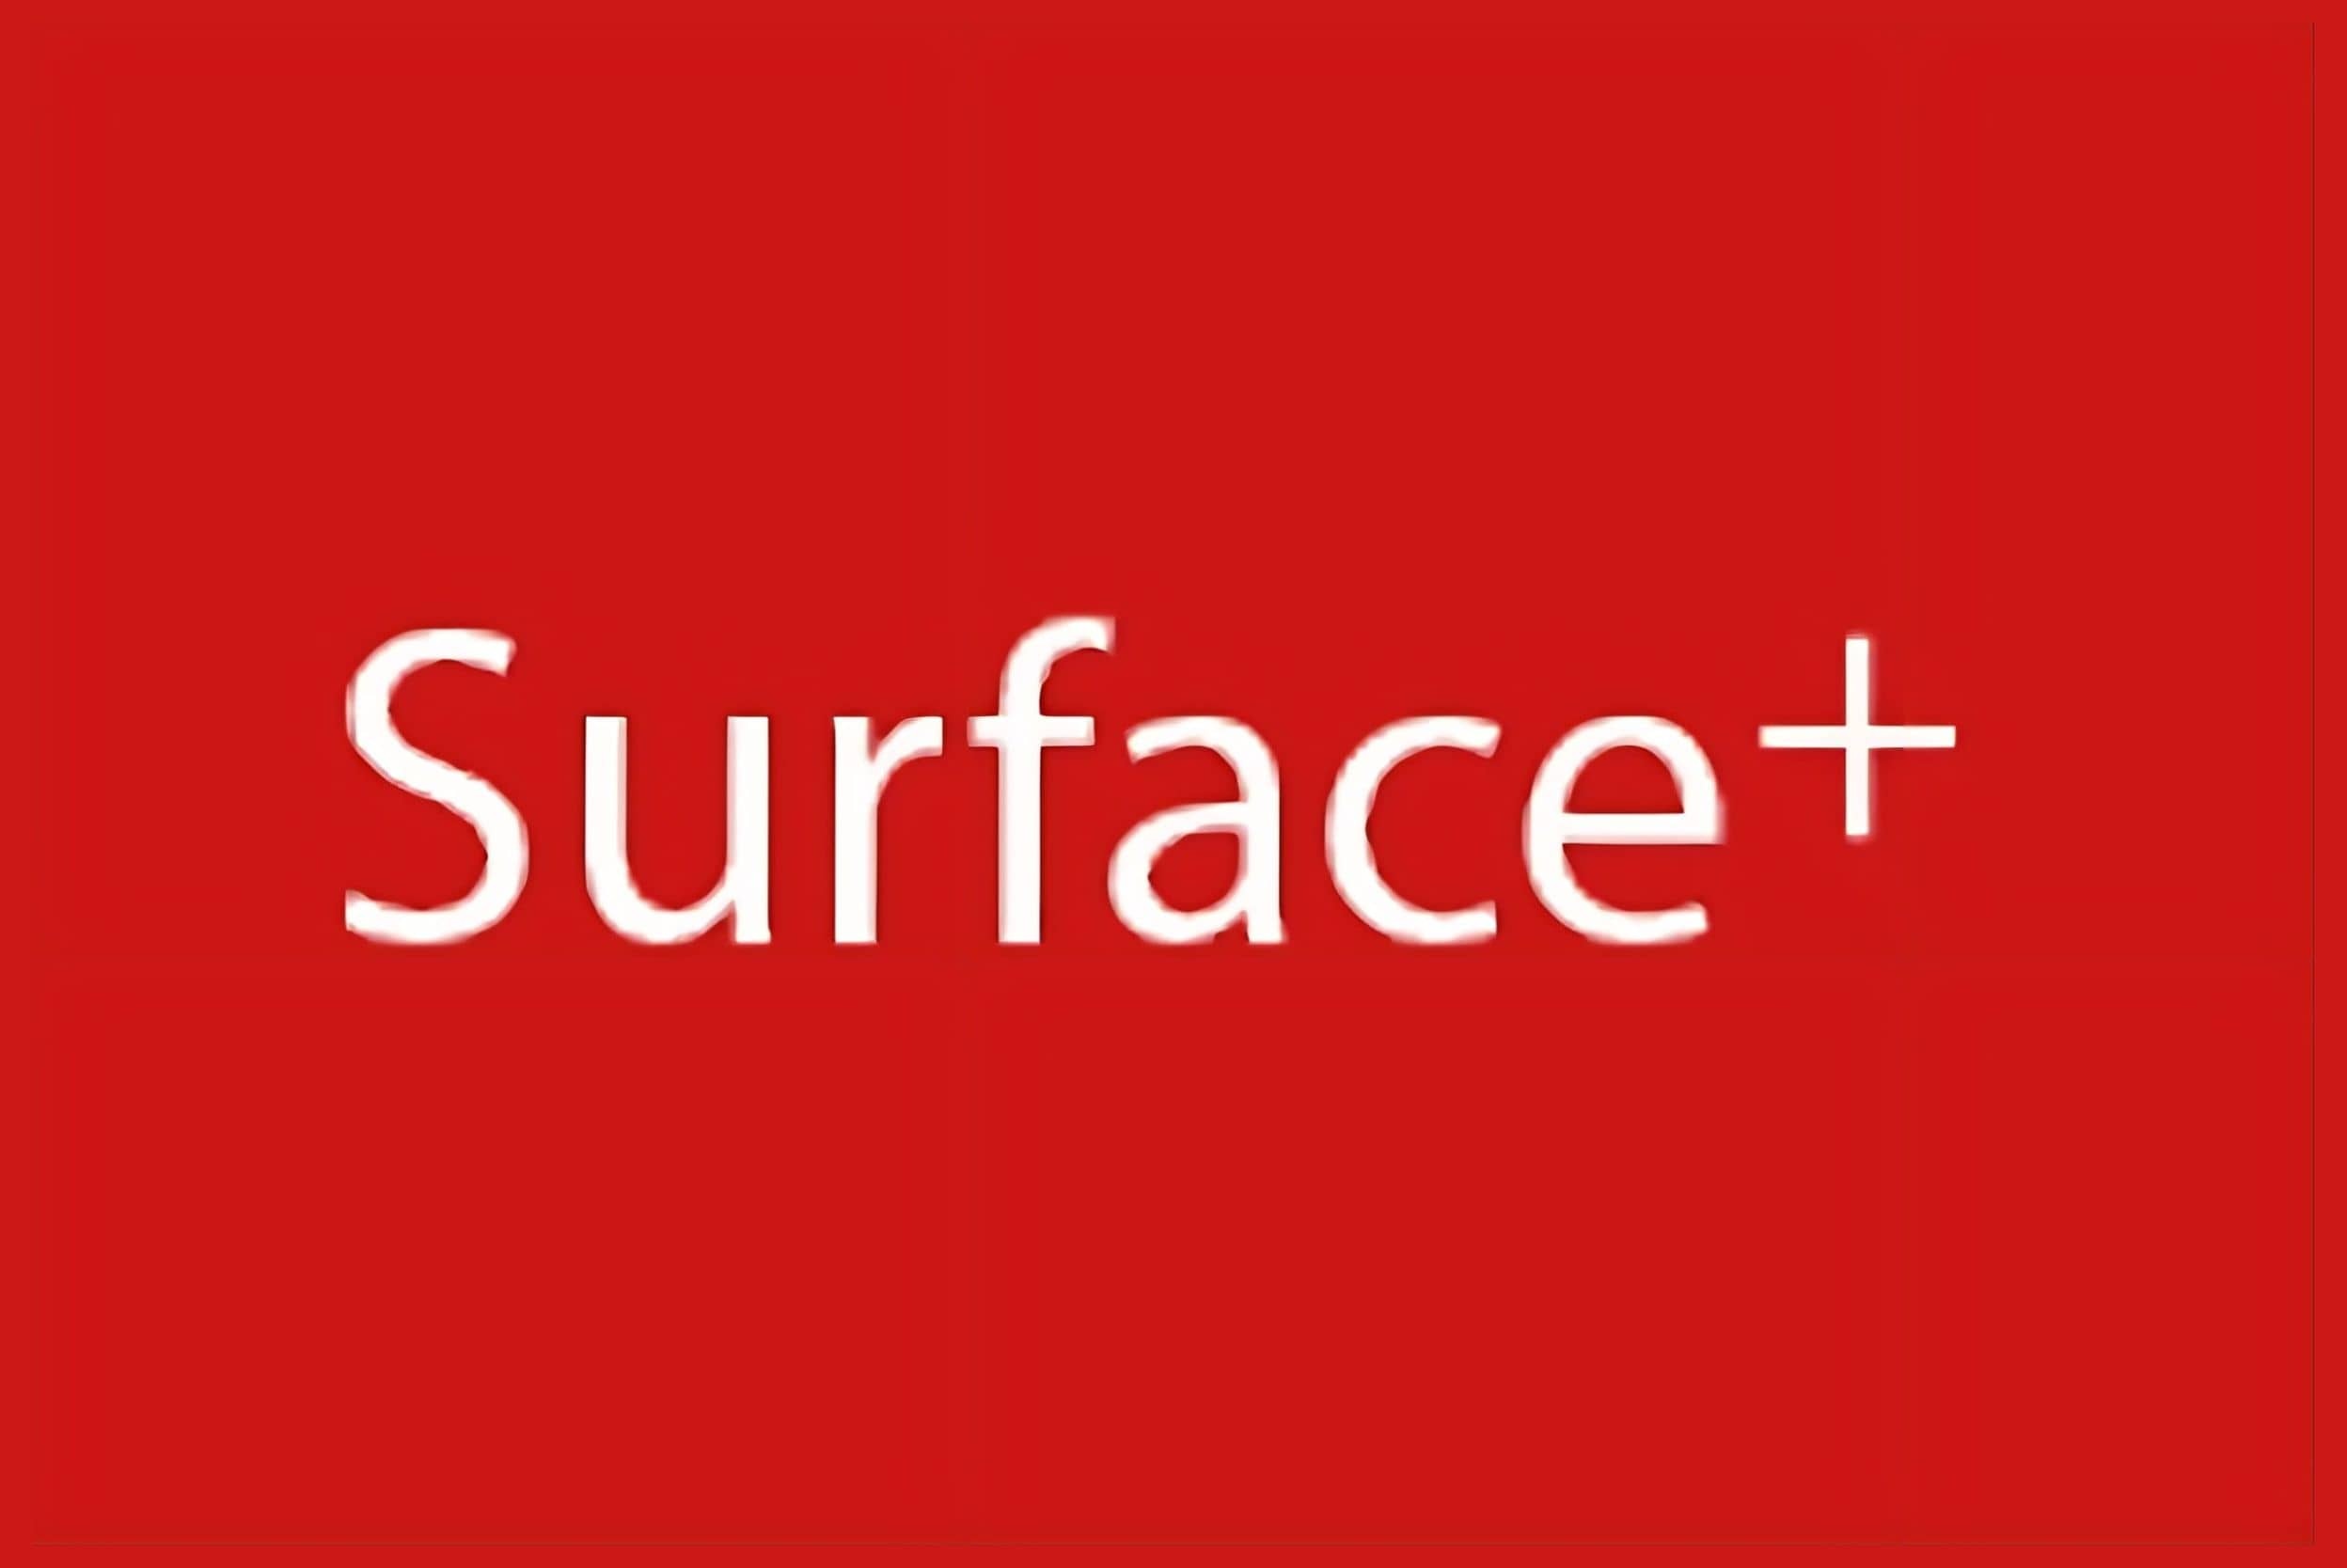 surface+-logo